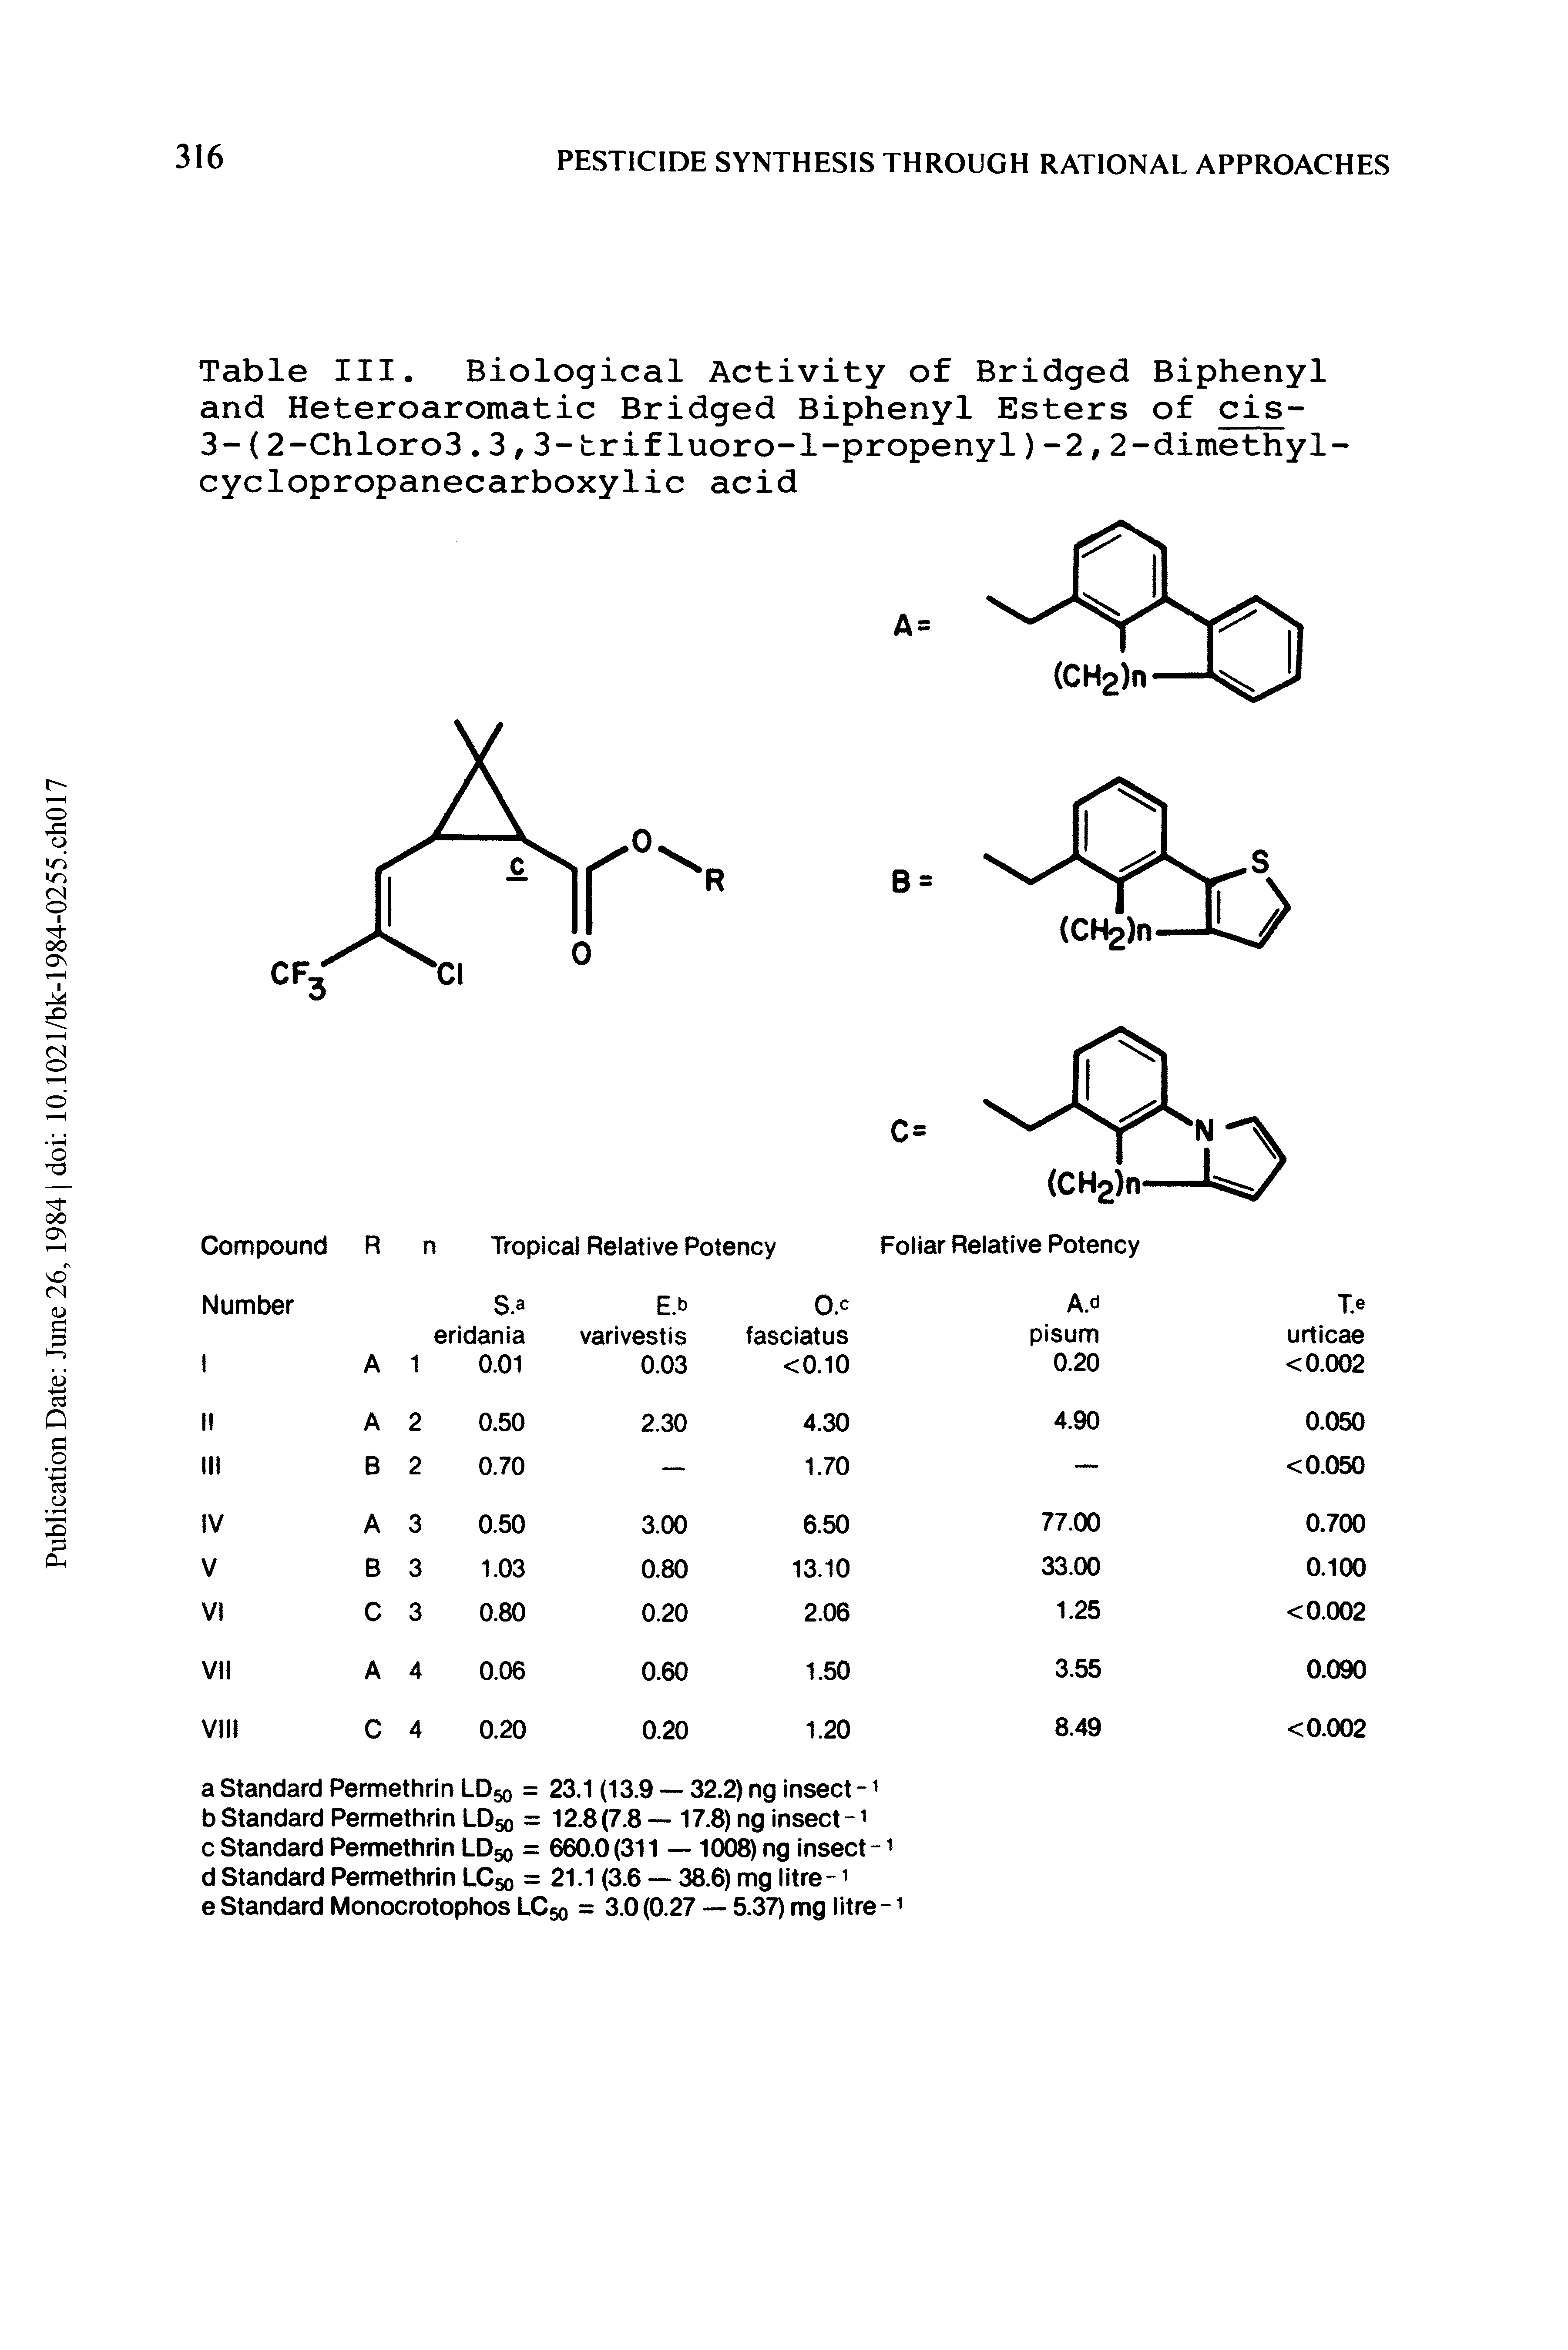 Table III. Biological Activity of Bridged Biphenyl and Heteroaromatic Bridged Biphenyl Esters of cis-3-(2 Chloro3.3,3-trifluoro-l-propenyl)-2,2-dimethyl-cyclopropanecarboxylic acid...